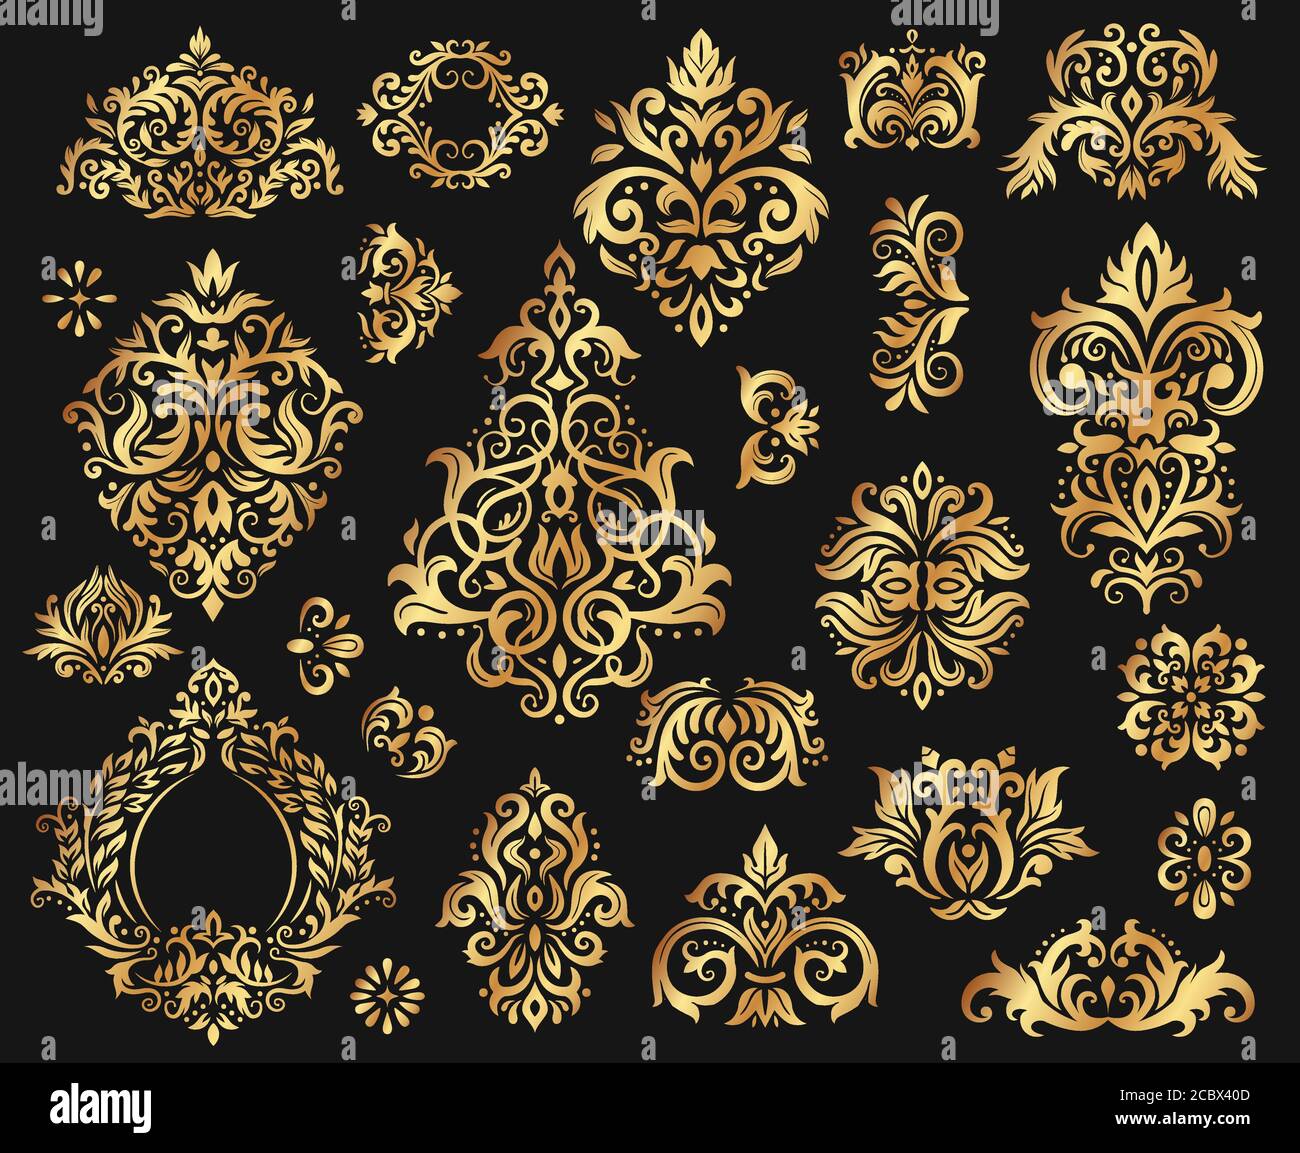 Goldenes Damast-Ornament. Vintage florale Zweige Muster, barocke Ornamente Stock Vektor